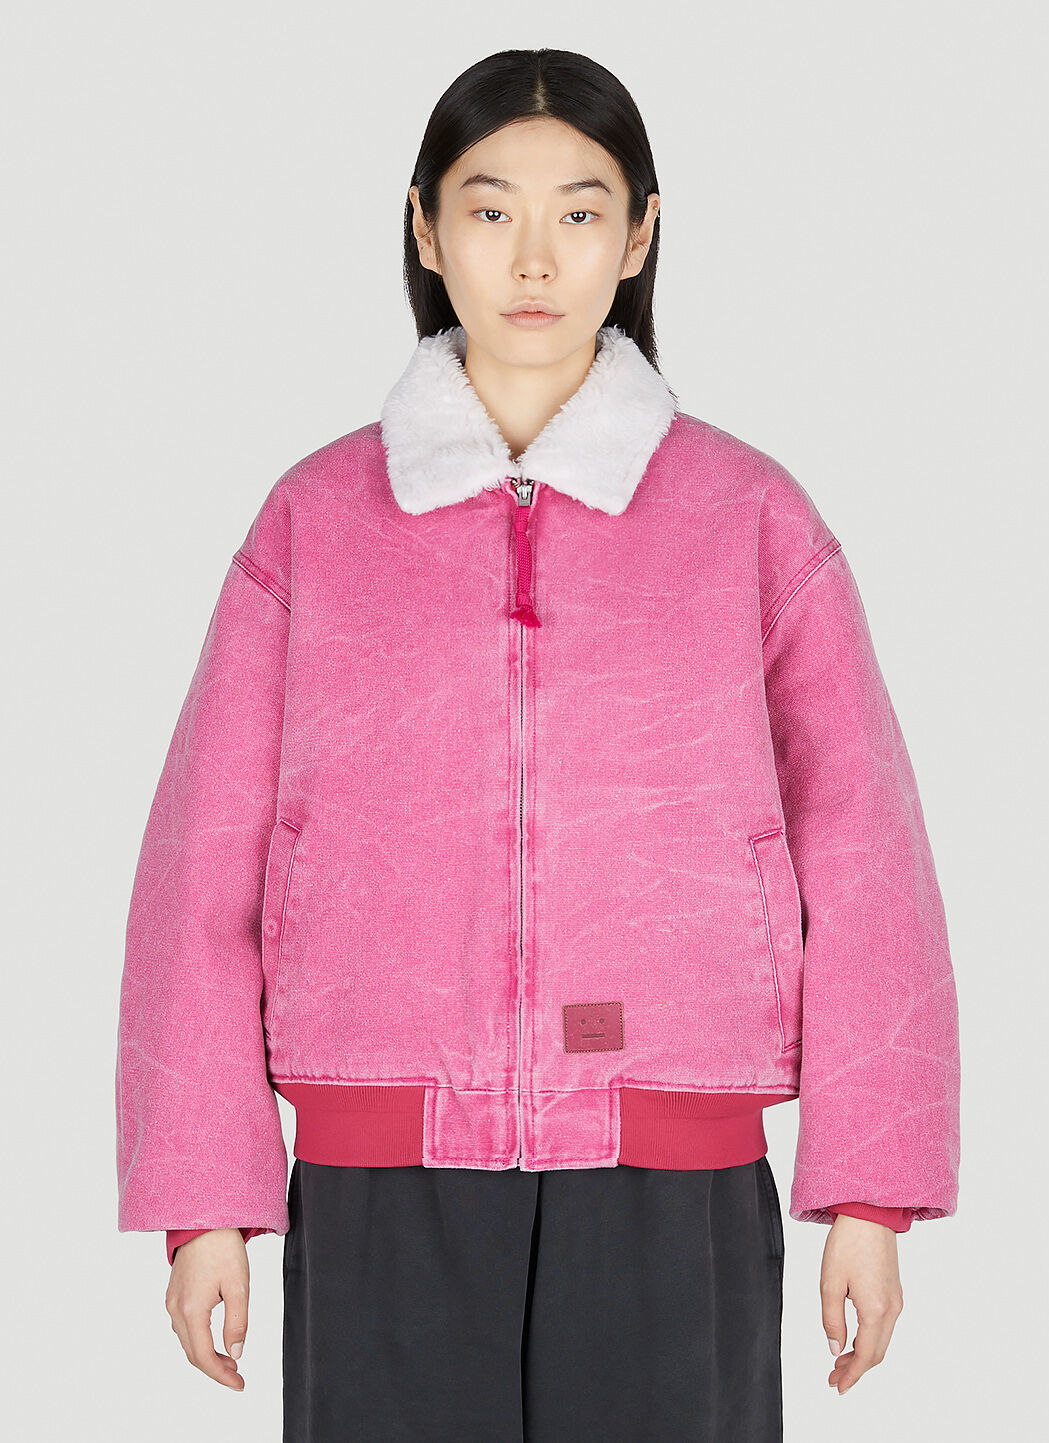 Acne Studios Denim Bomber Jacket in Pink | LN-CC®